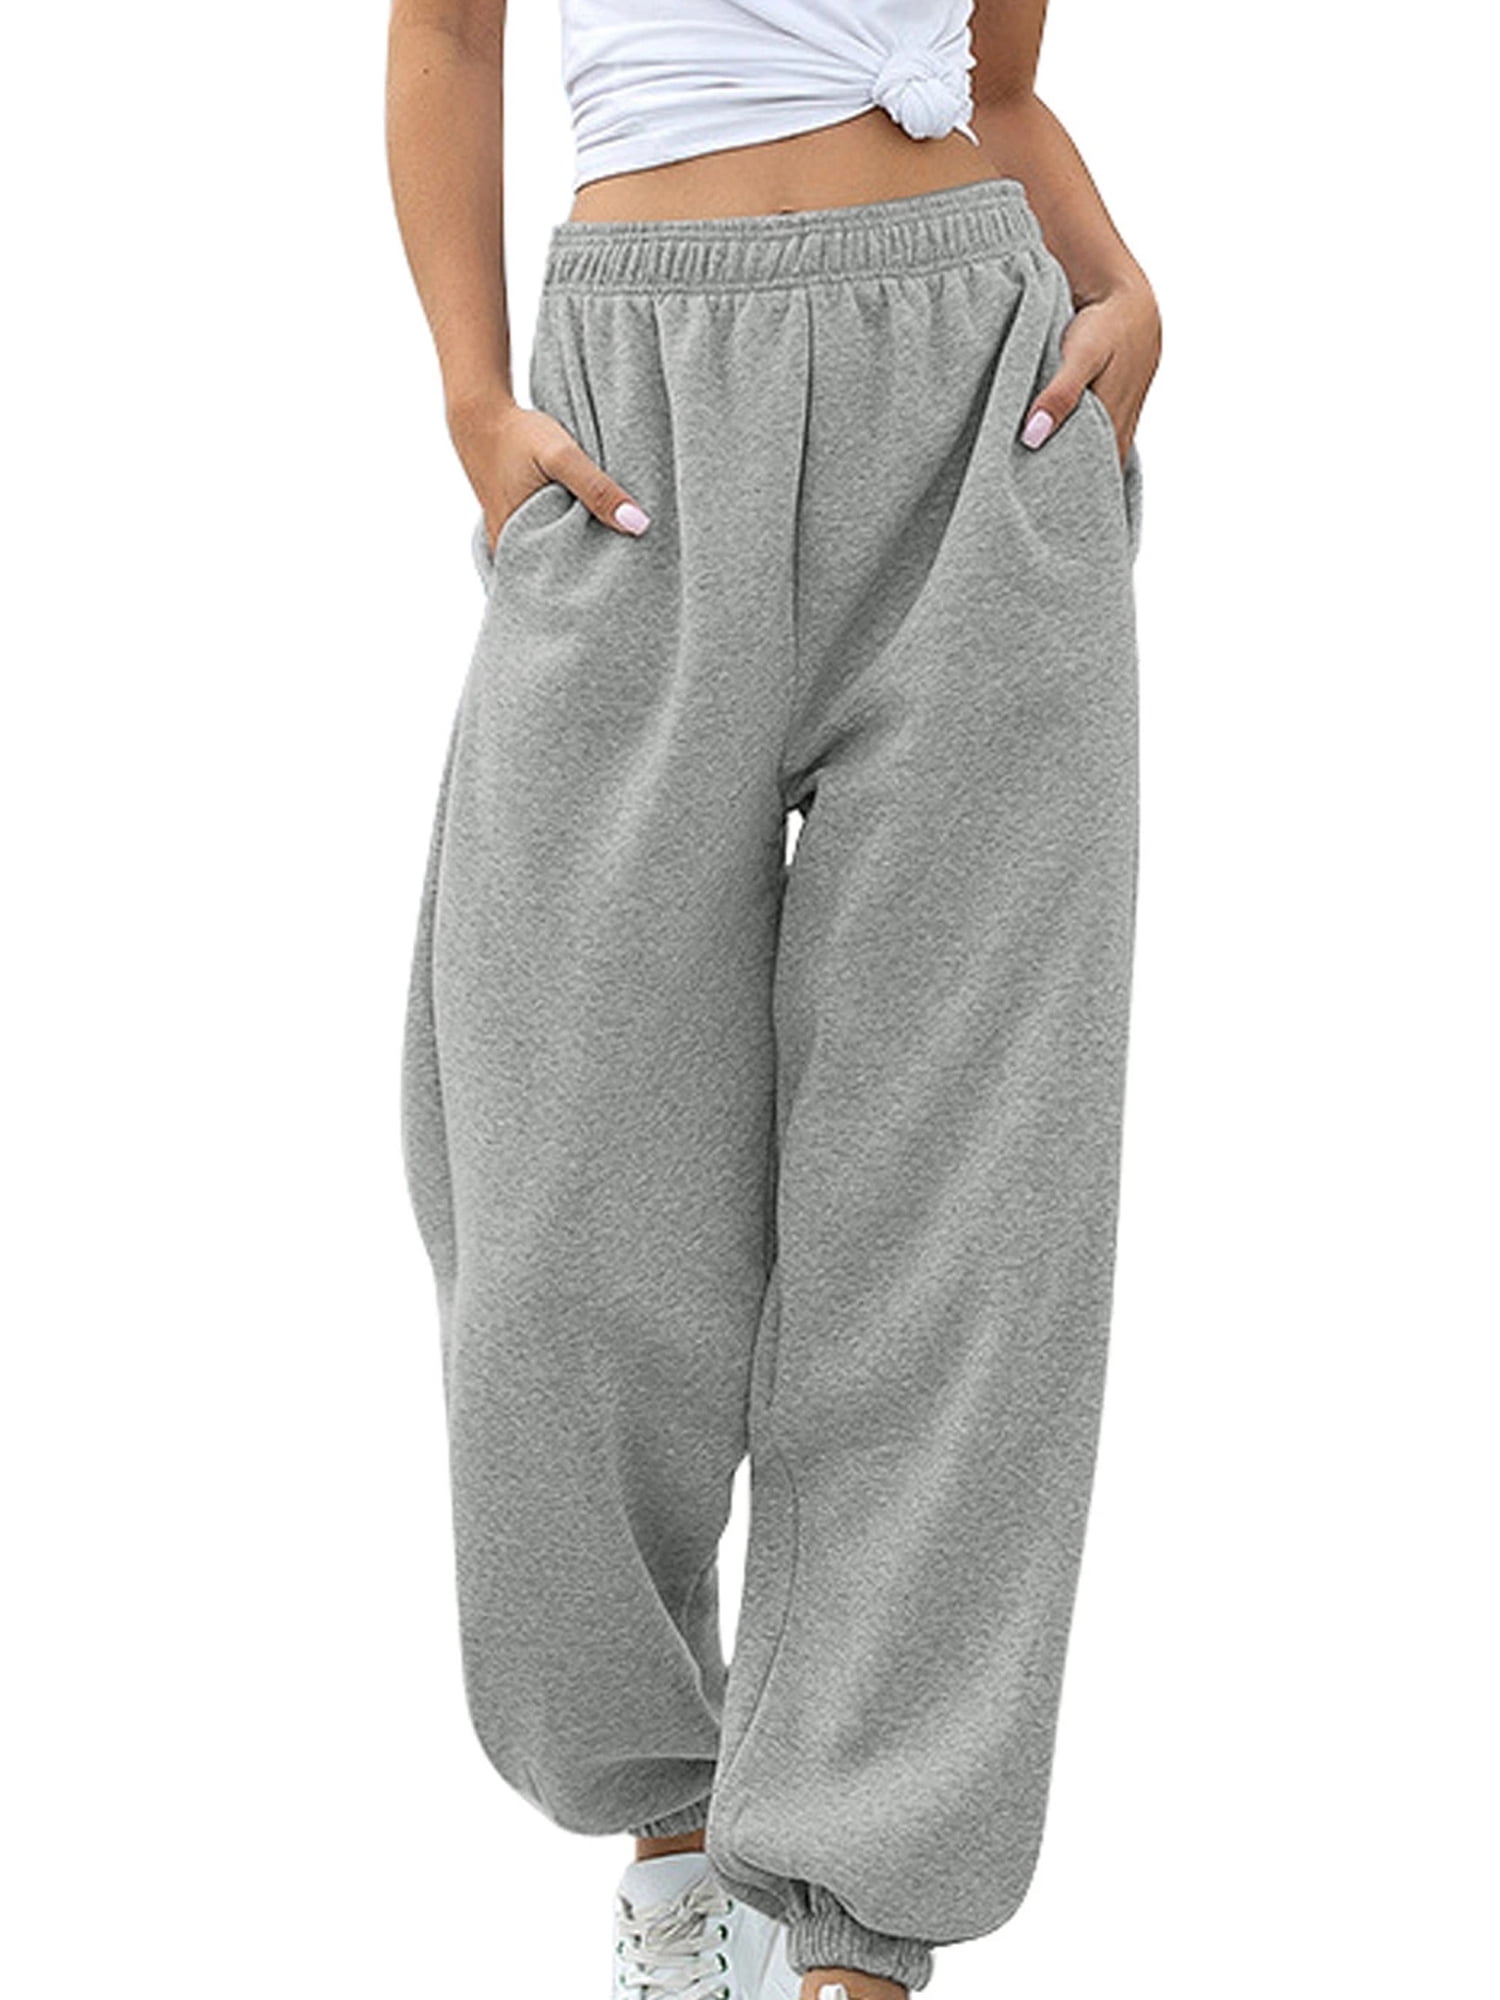 Bebiullo Women's Casual Jogger Thick Cotton High Waist Workout Pants Cinch Bottom with Pockets - Walmart.com